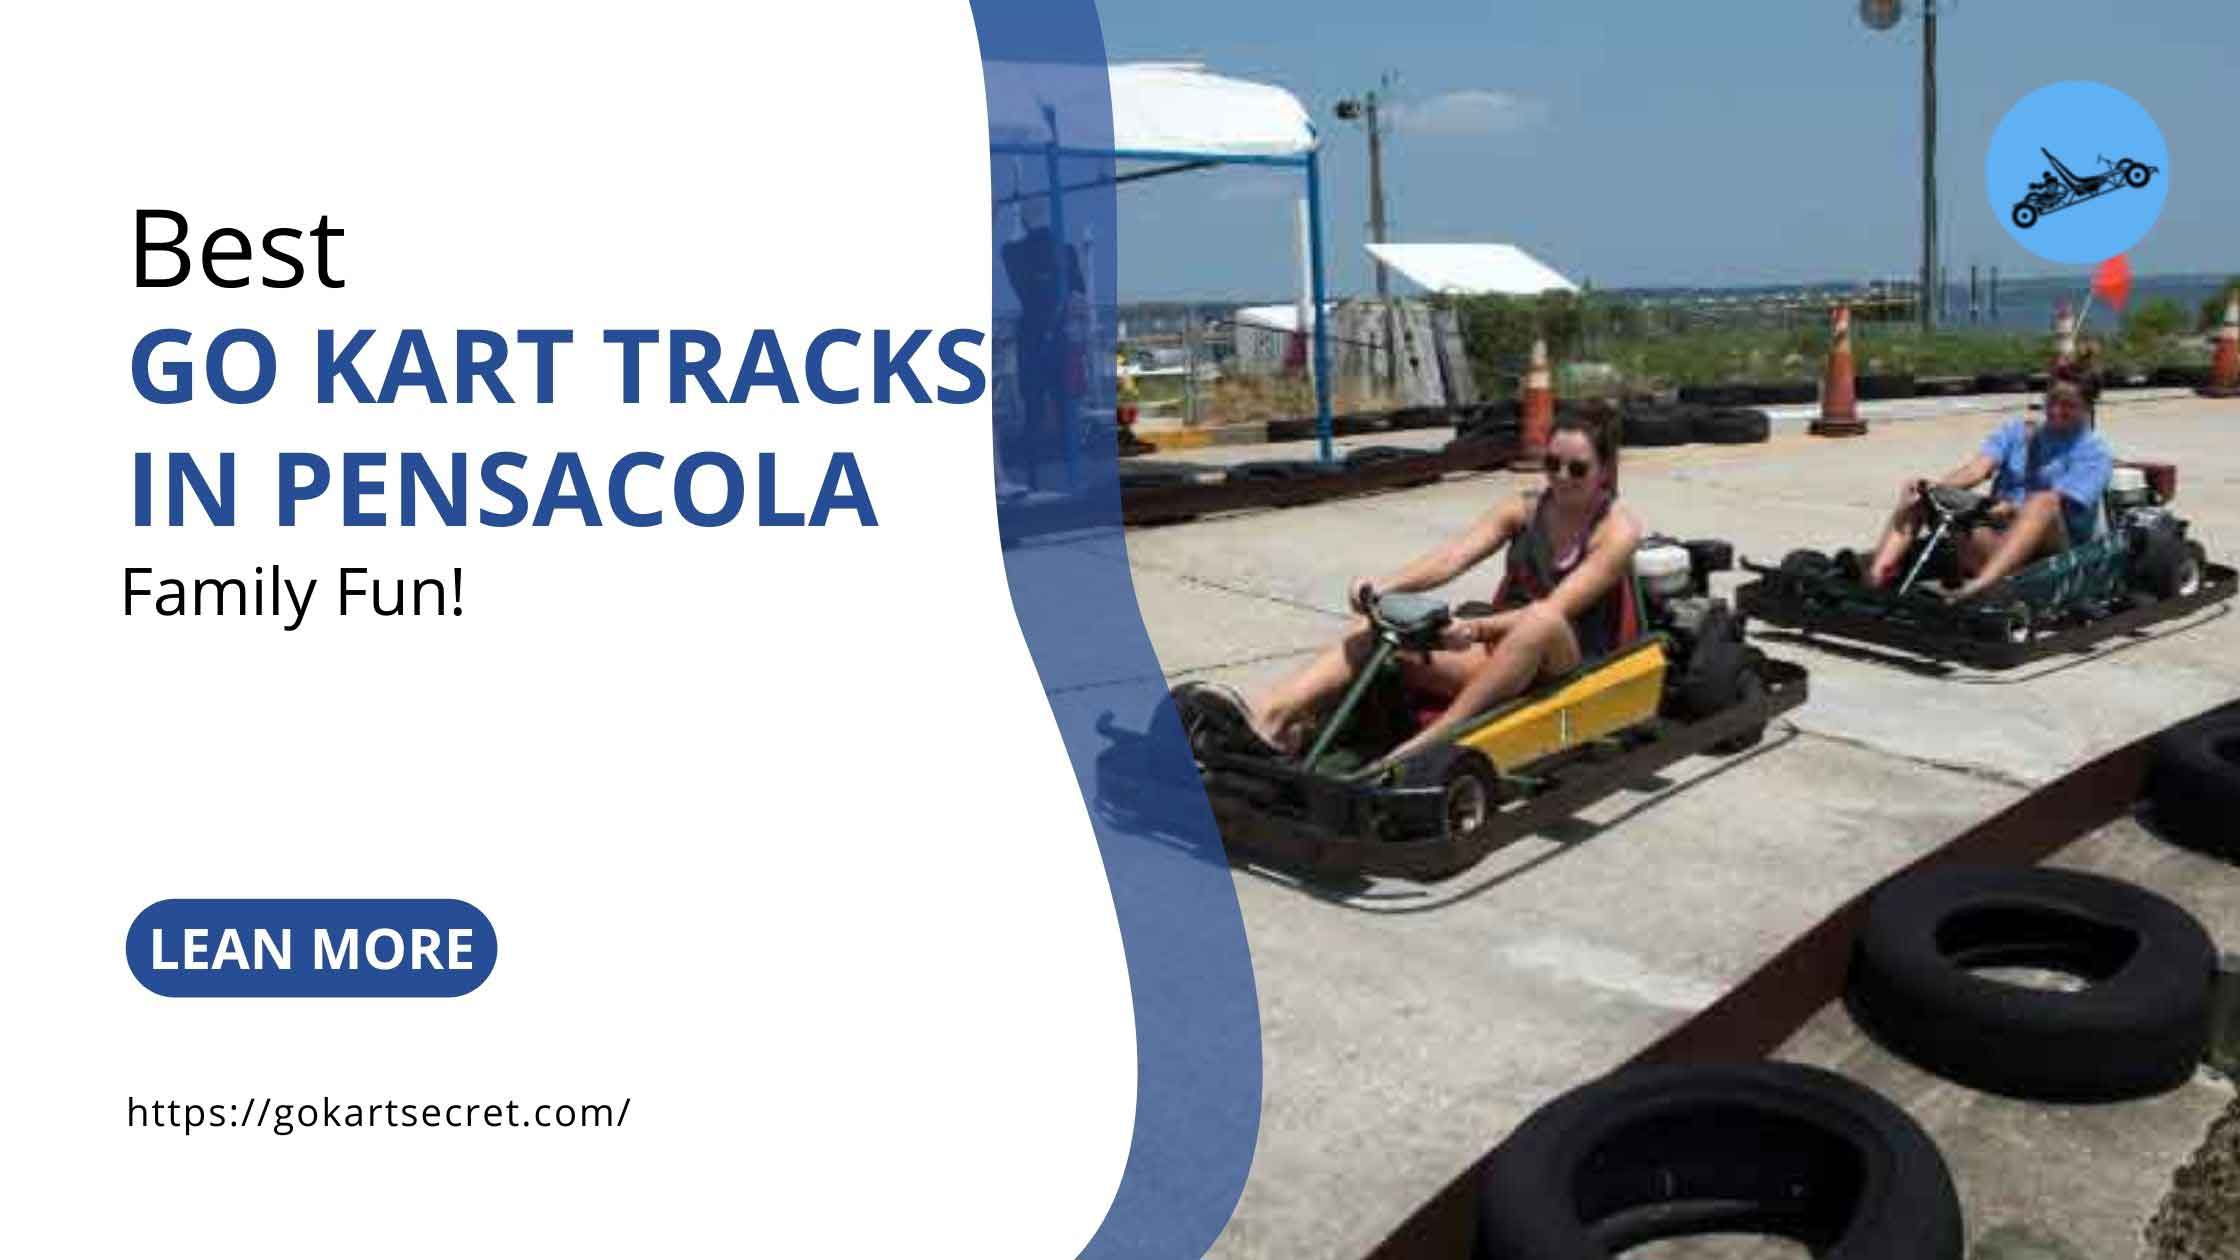 3 Best Go Kart Tracks In Pensacola | Family Fun